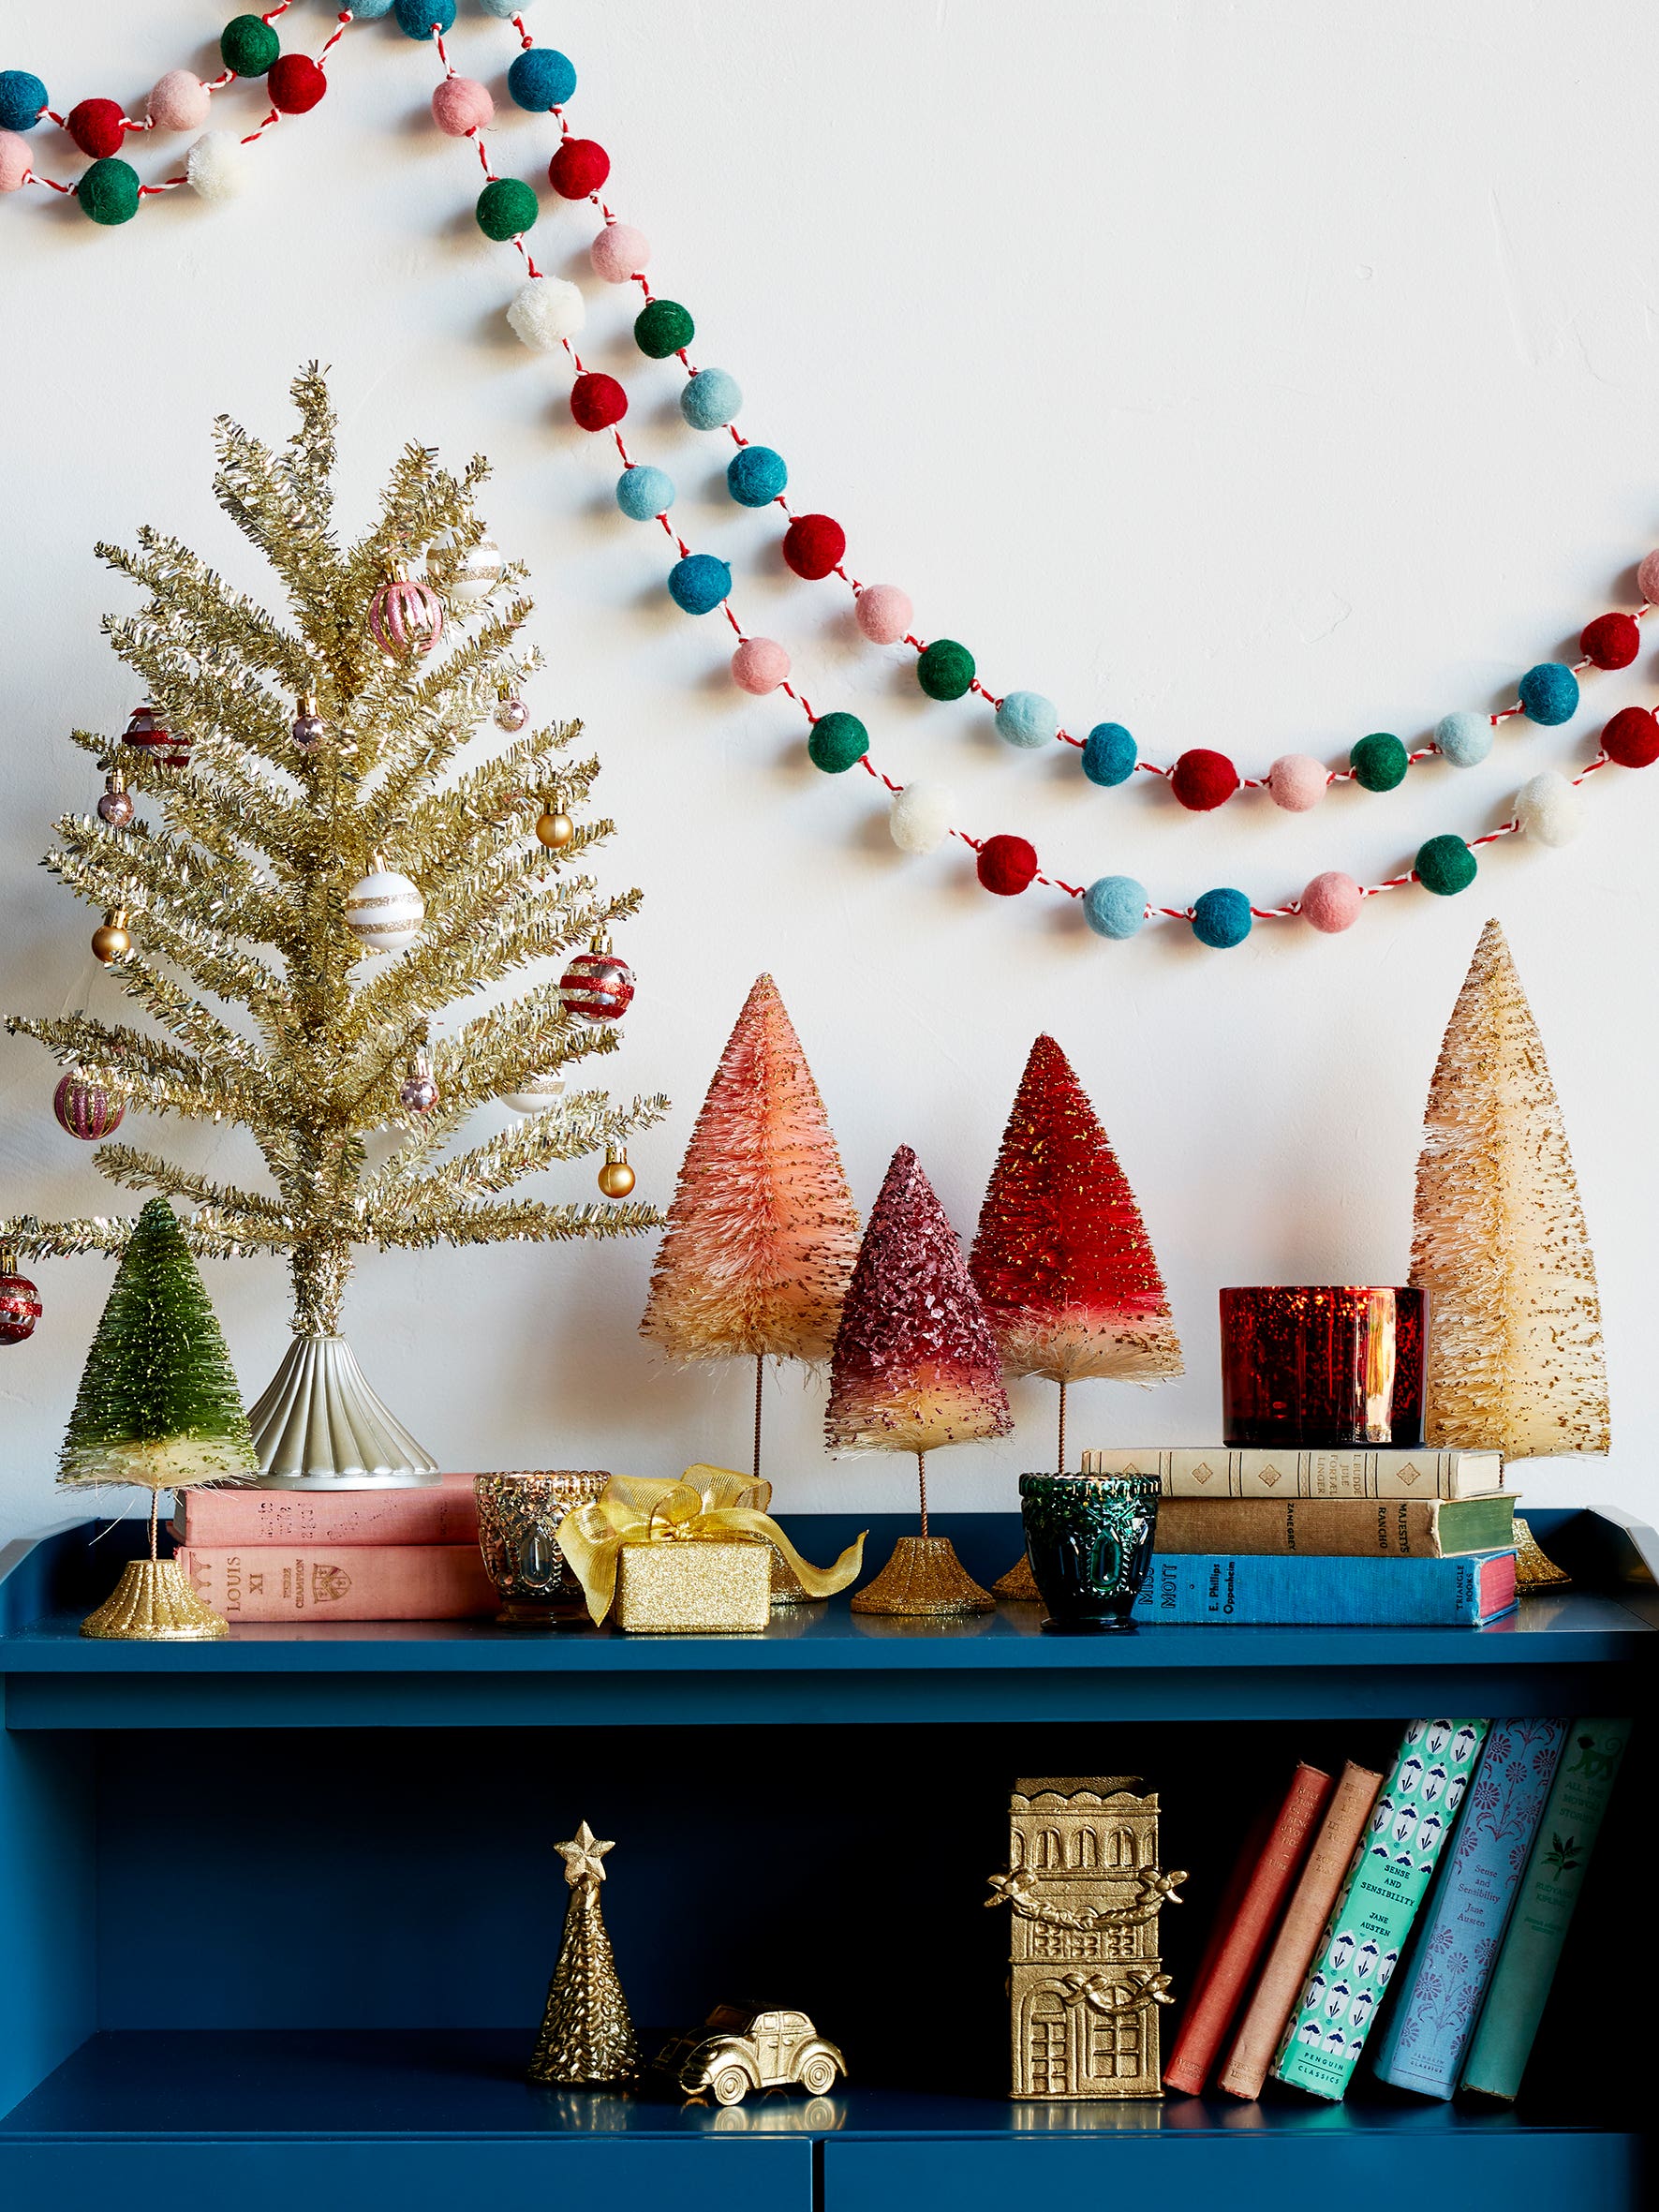 blue-bookshelf-colorful-christmas-decorations